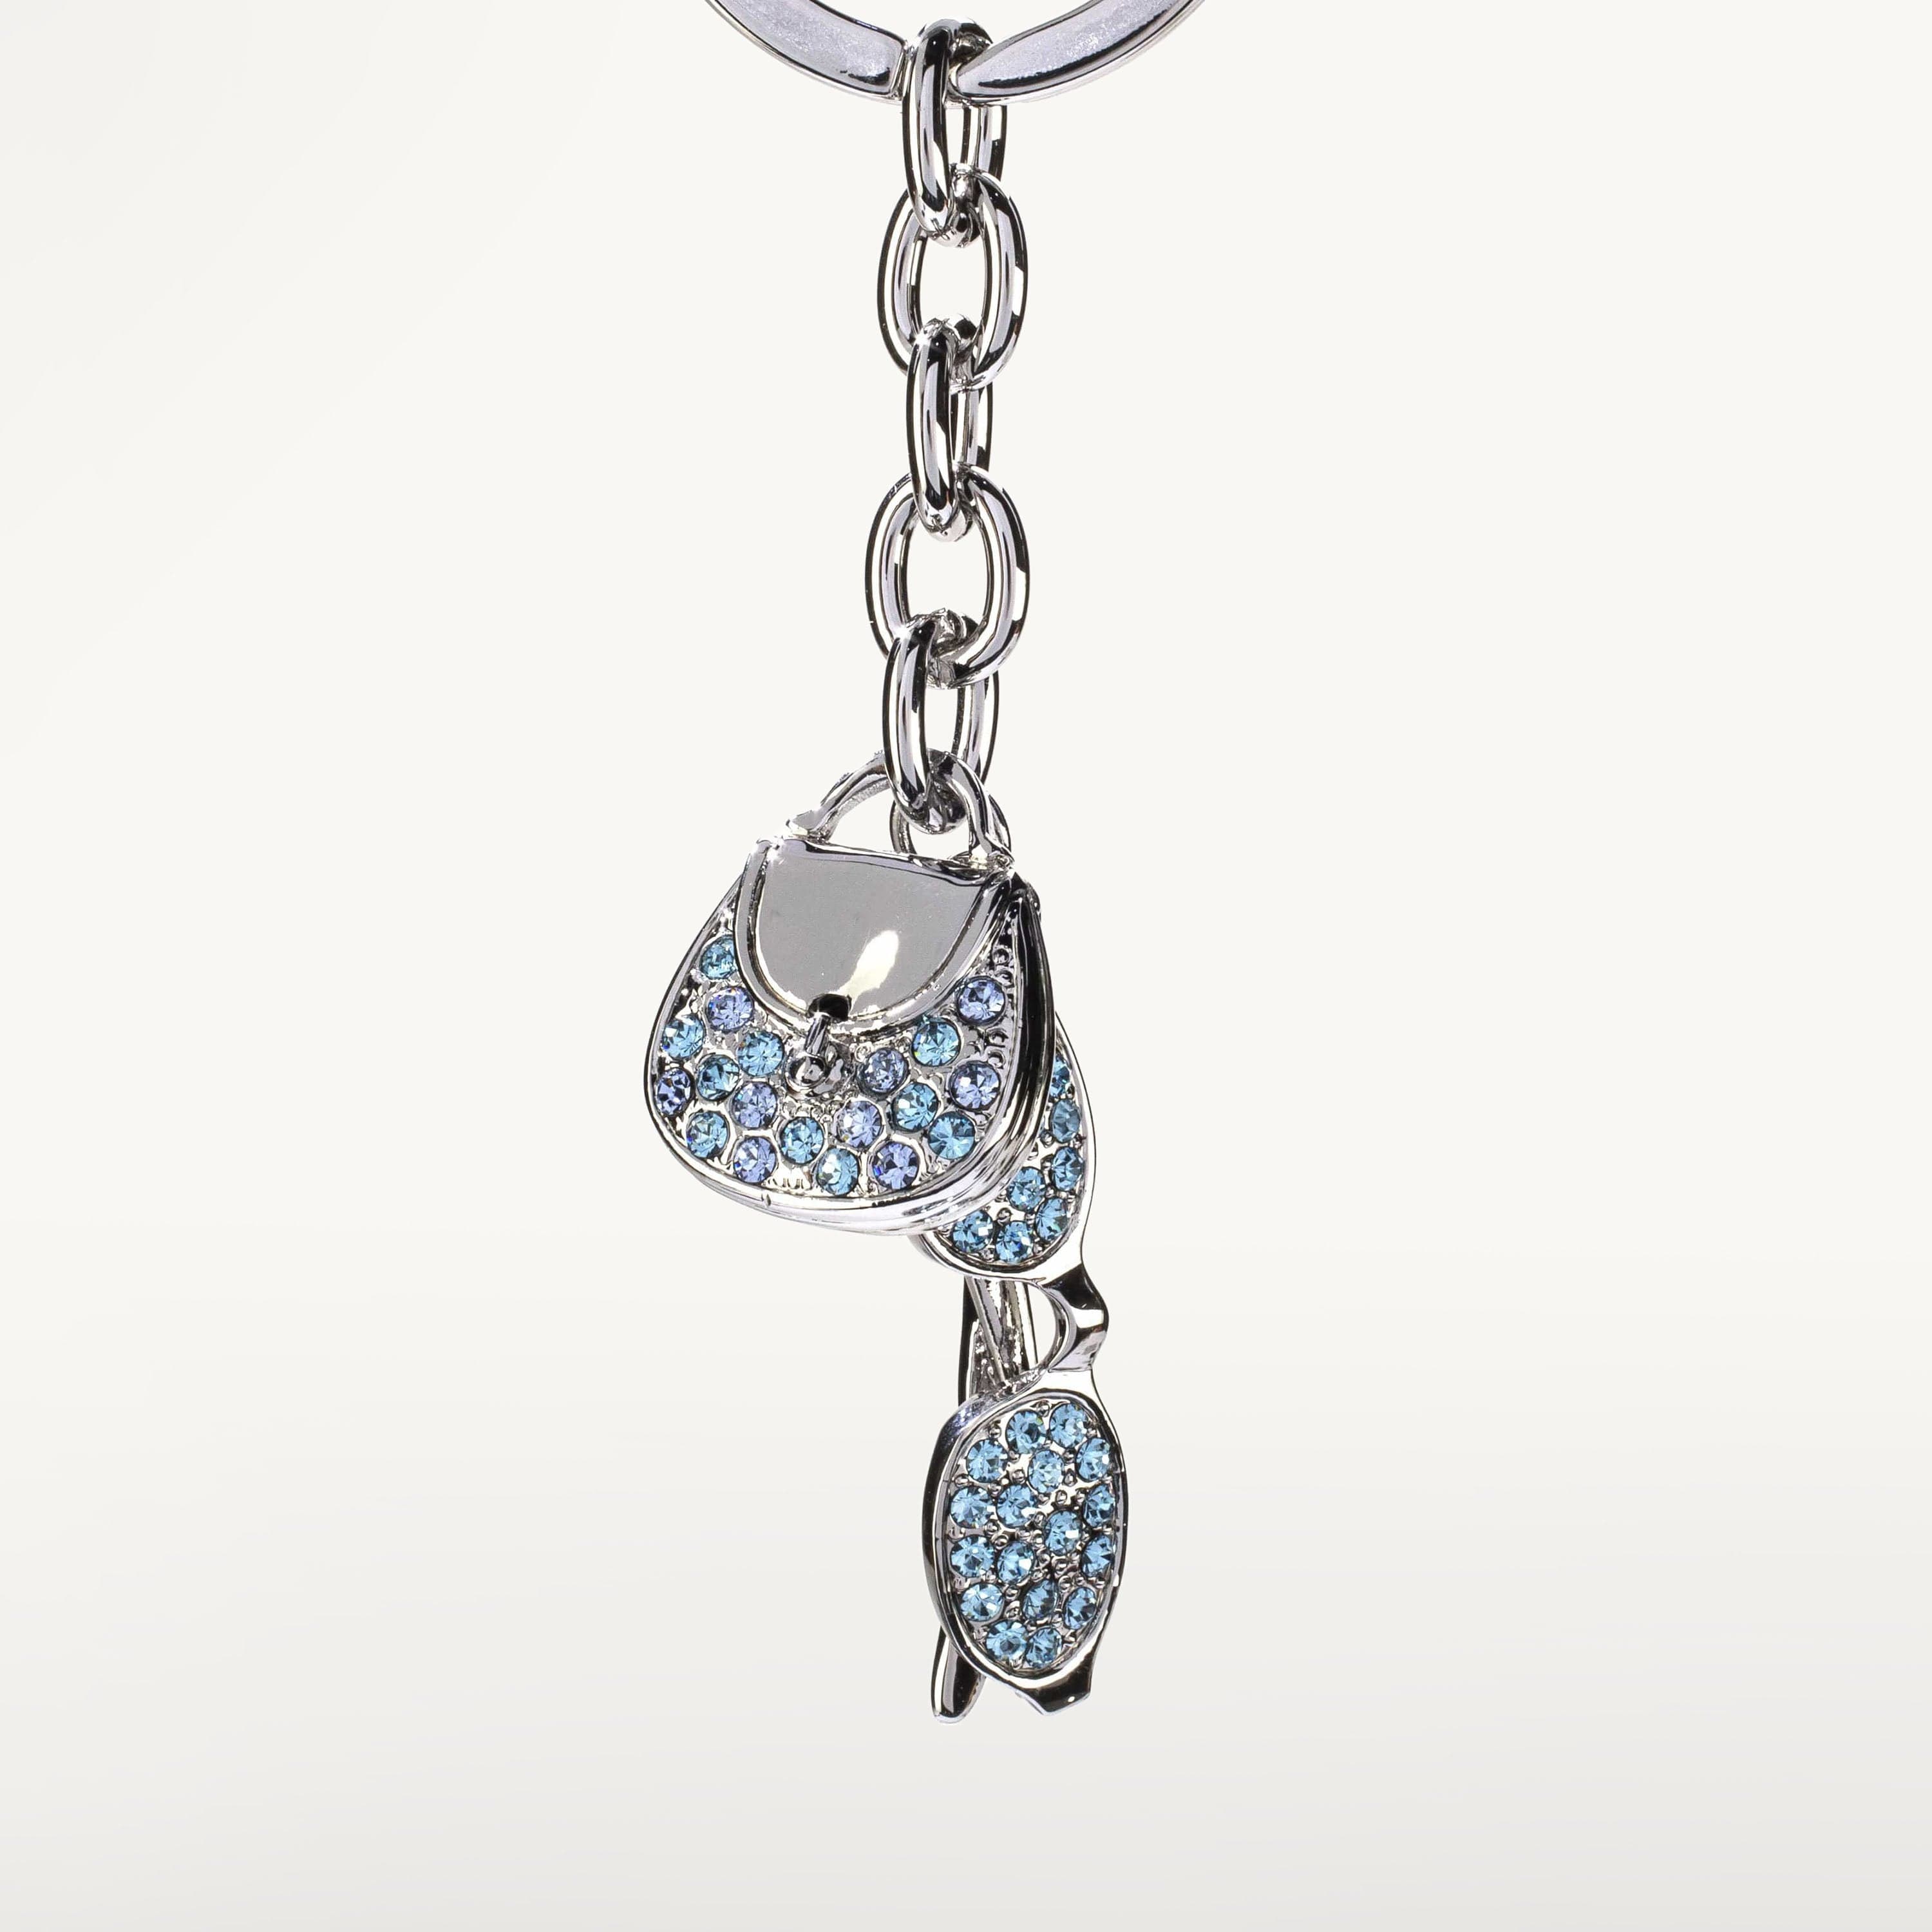 Kalifano Crystal Keychains Blue Glasses & Purse Keychain made with Swarovski Crystals SKC-033